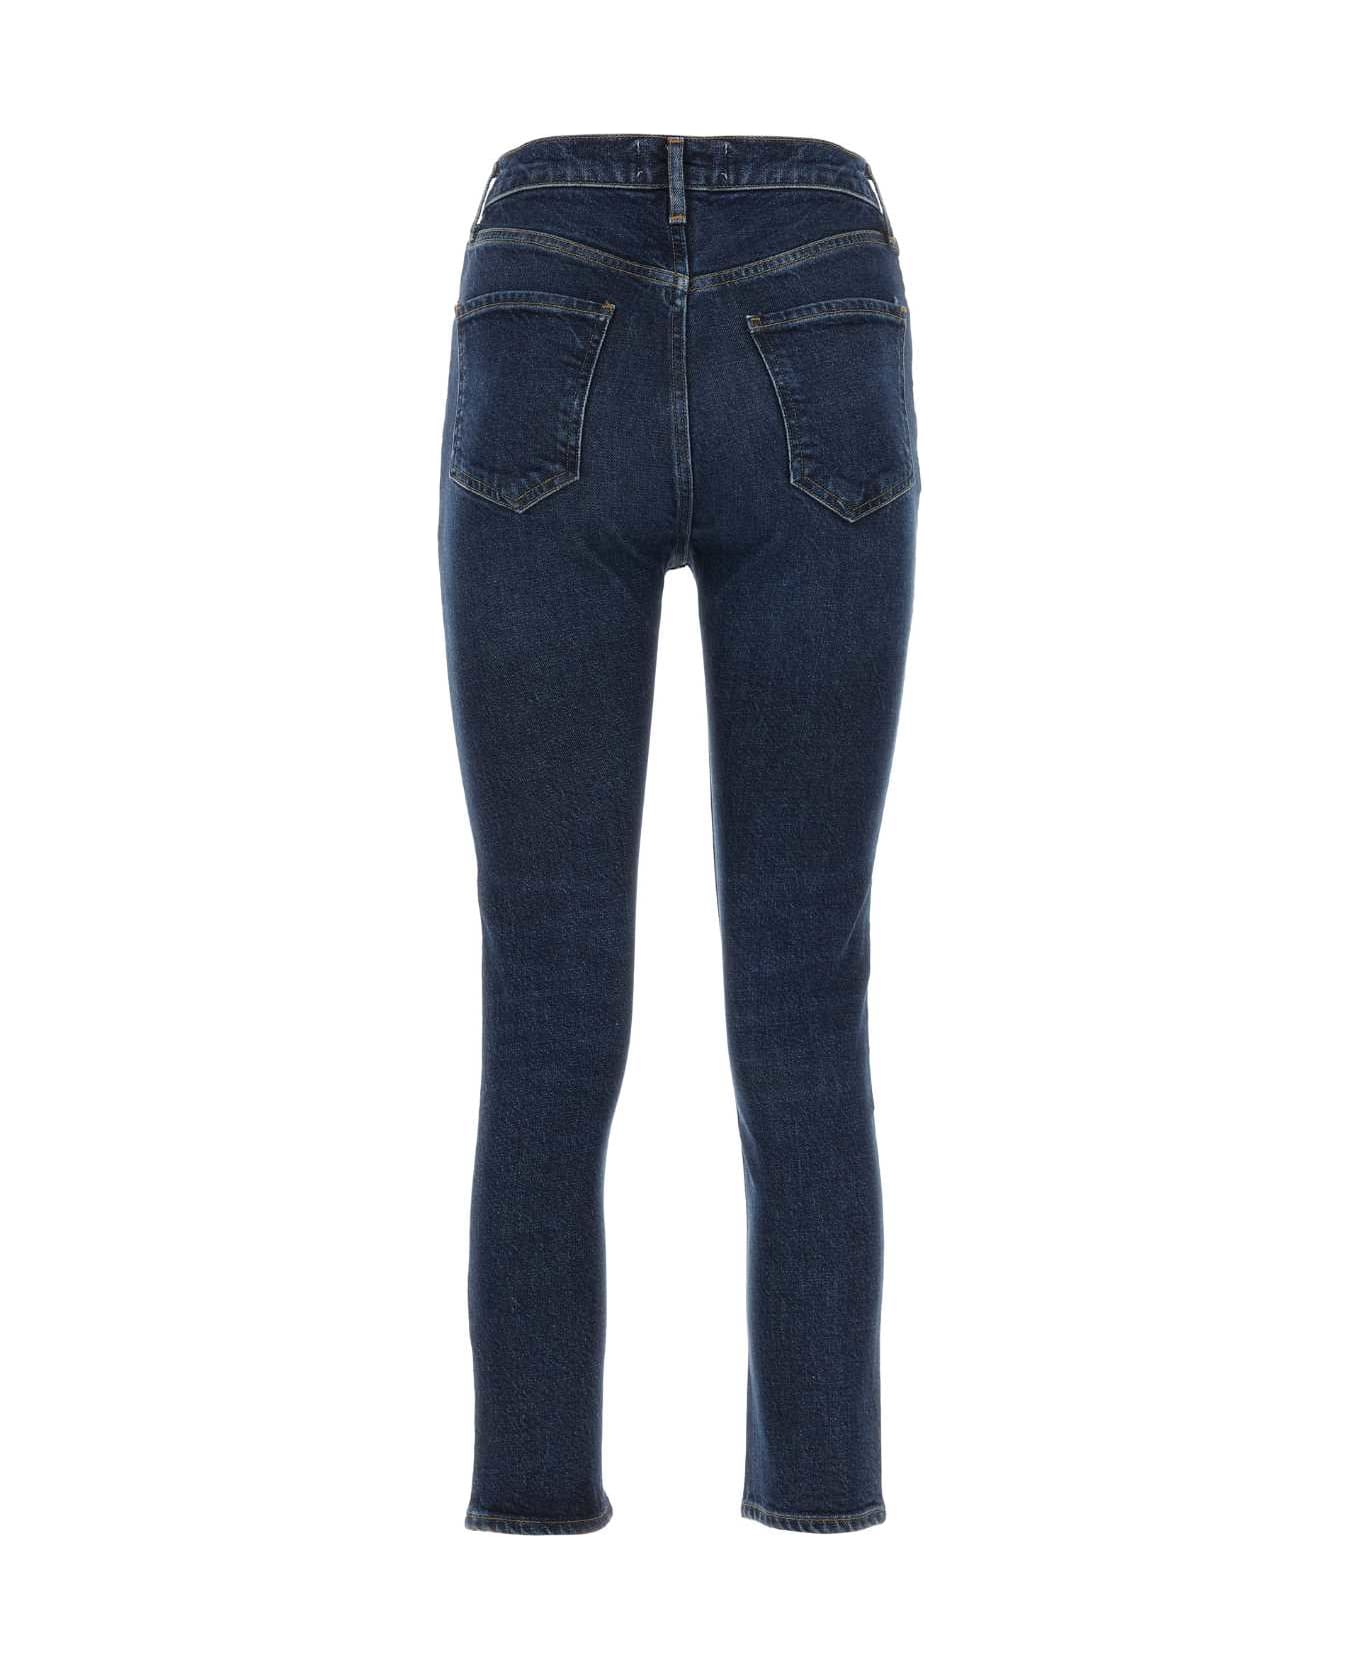 AGOLDE Stretch Denim Jeans - DDED